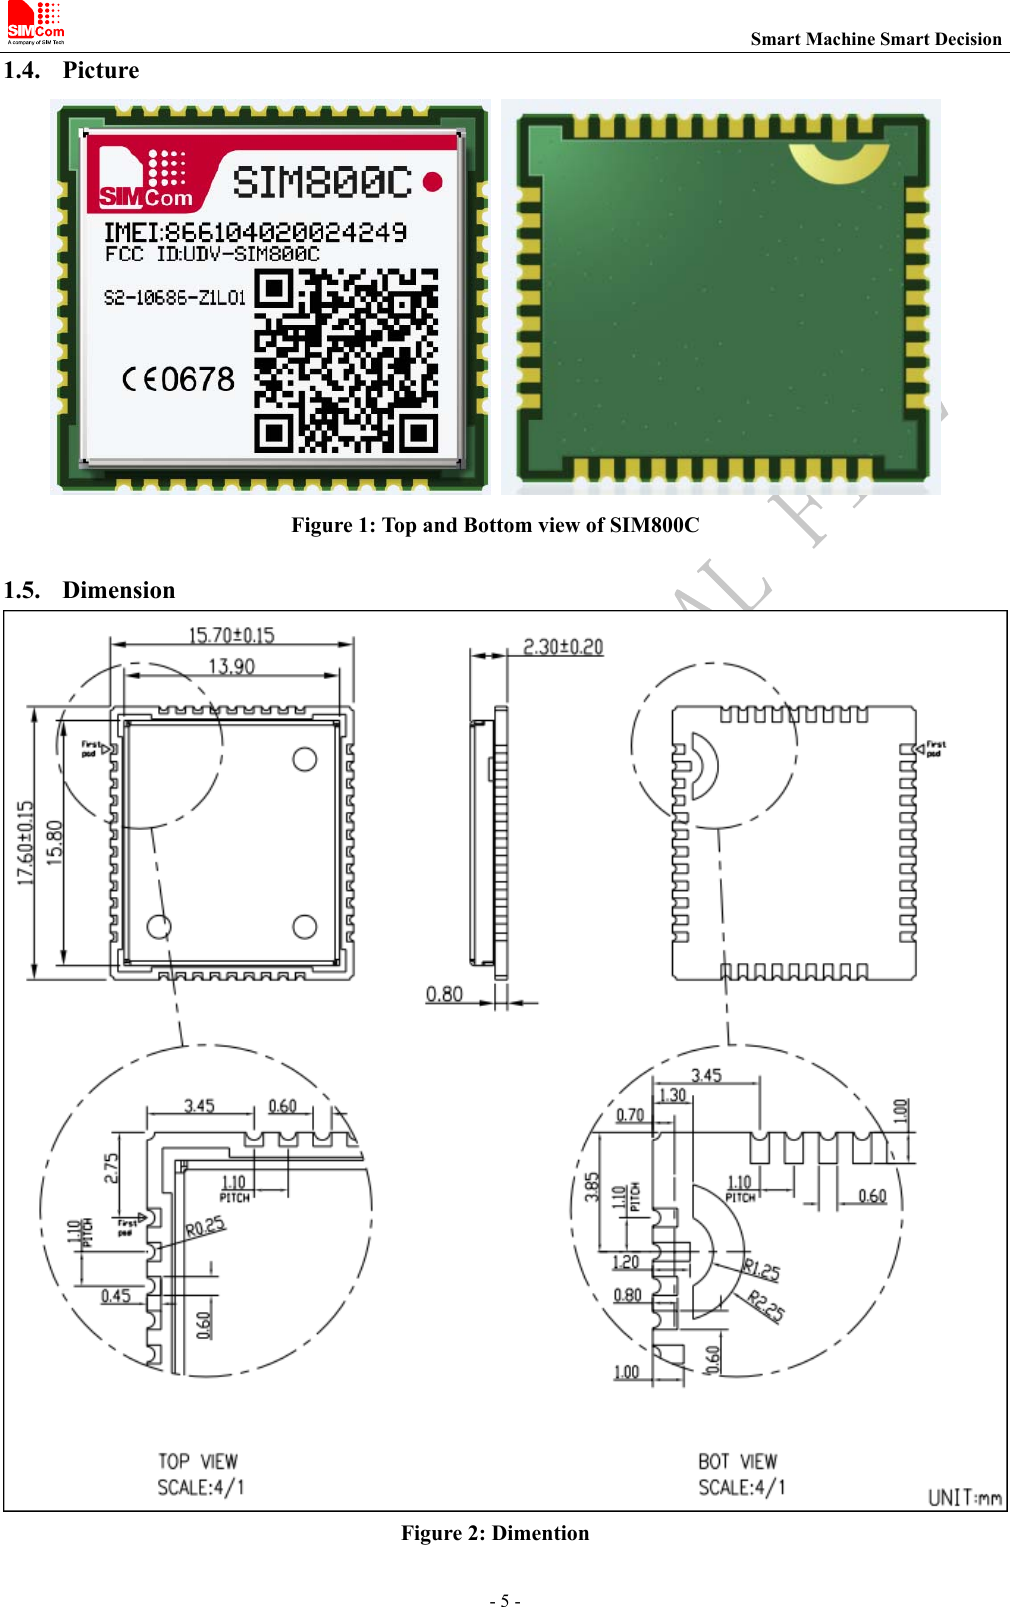                                                                          Smart Machine Smart Decision - 5 - 1.4. Picture    Figure 1: Top and Bottom view of SIM800C  1.5. Dimension  Figure 2: Dimention 